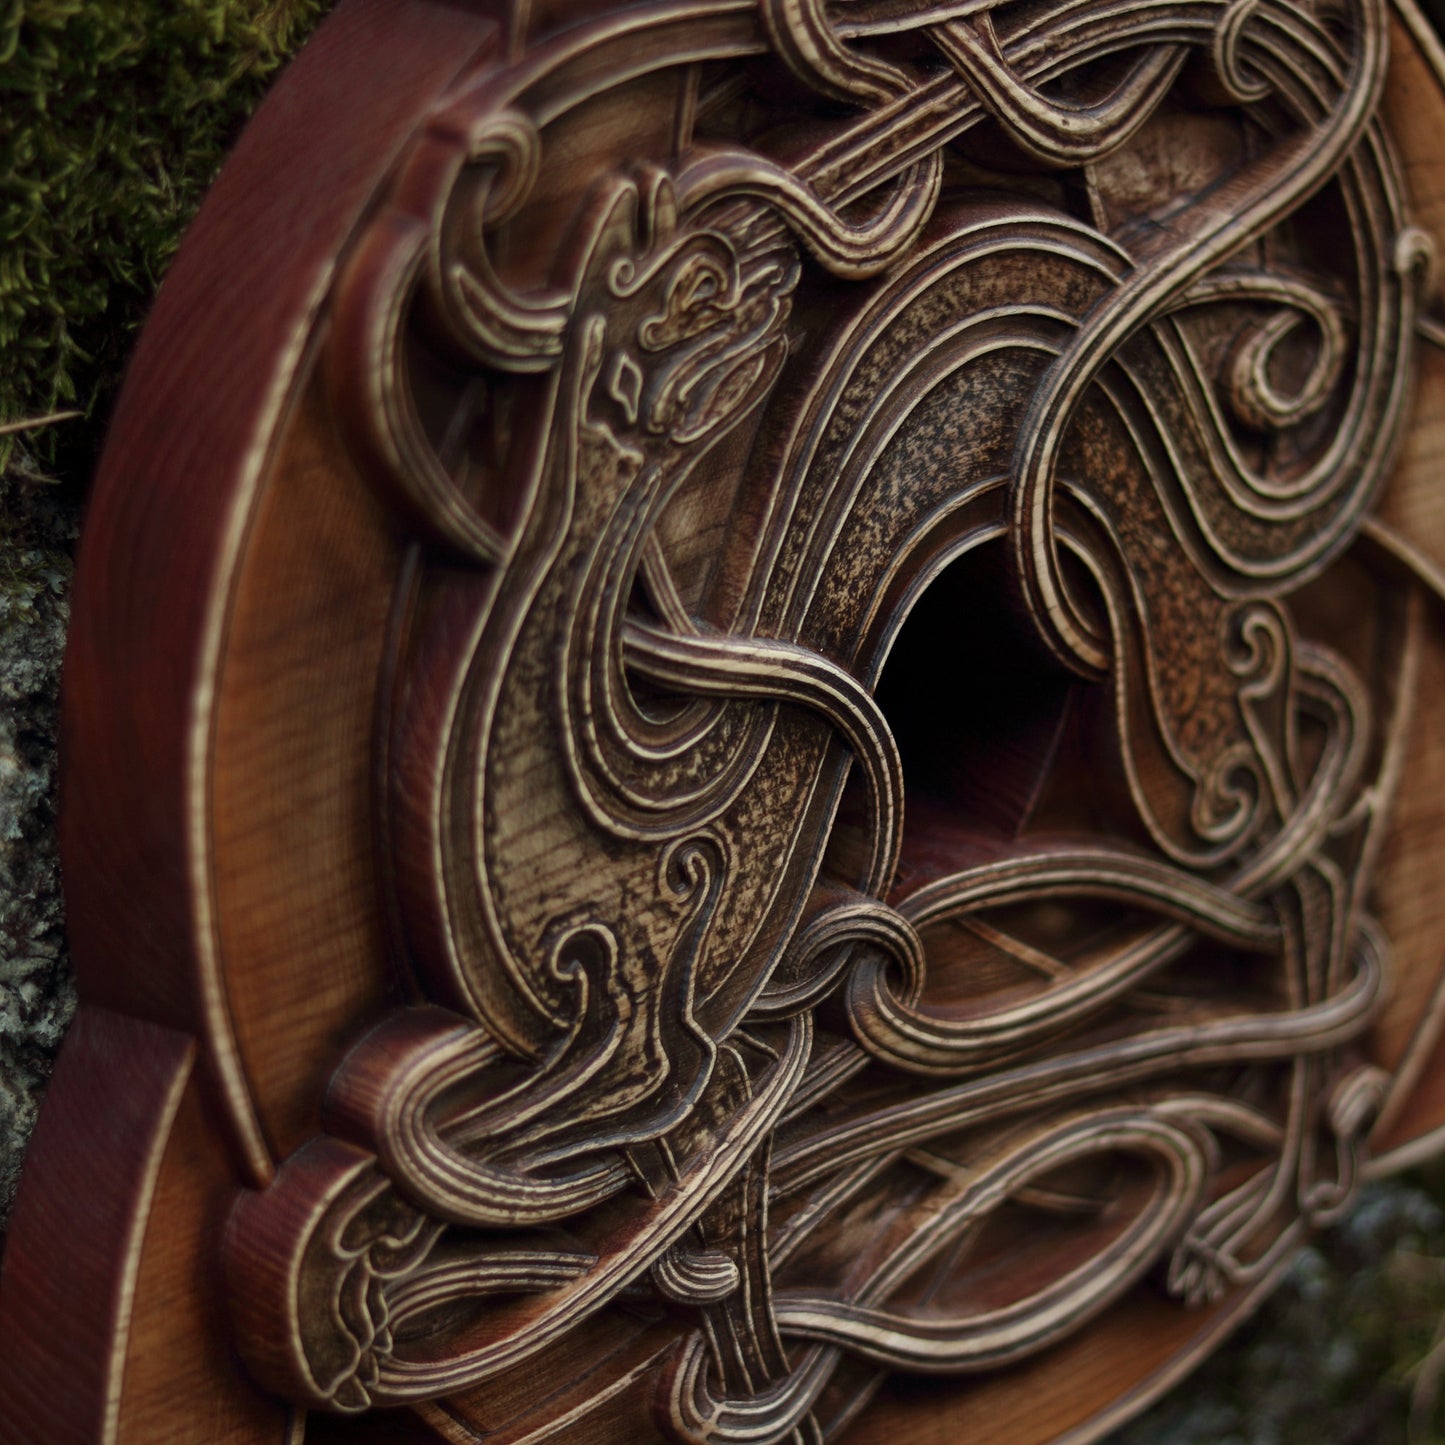 Celtic сat, Celtic wood knot, Carved wood panel